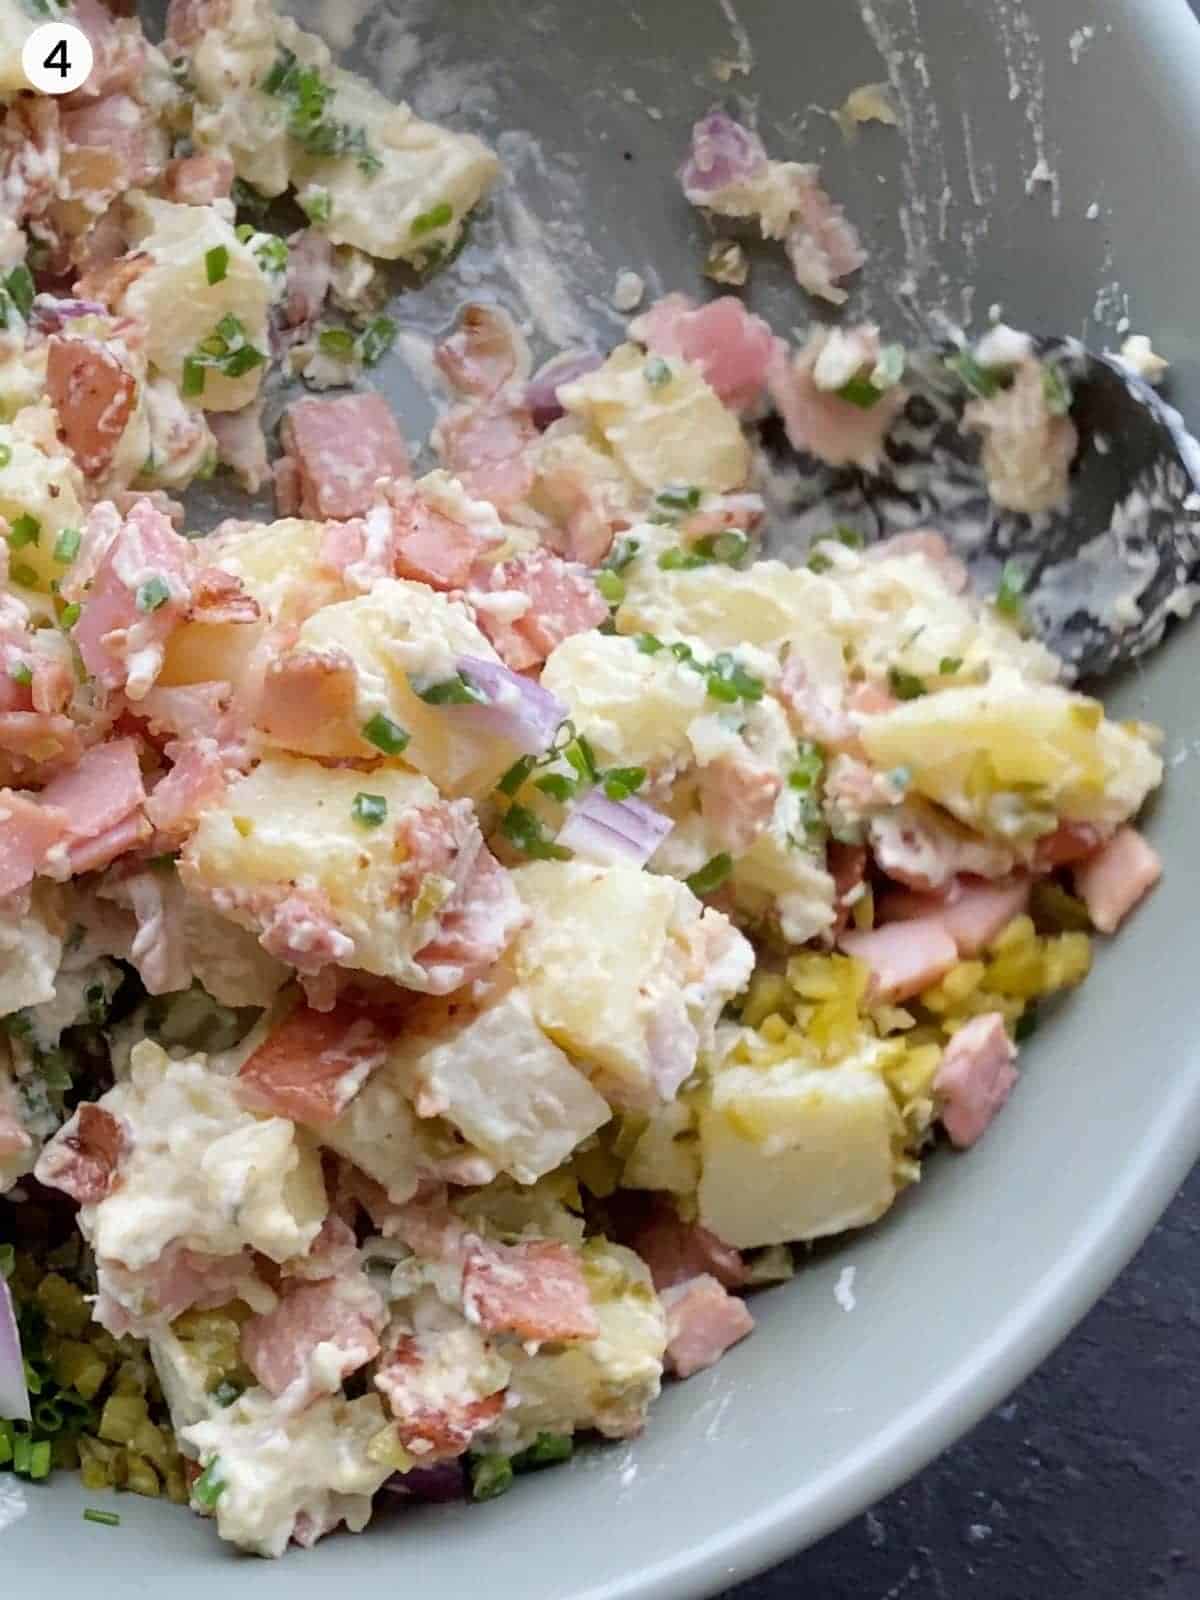 A mixing bowl of potato salad